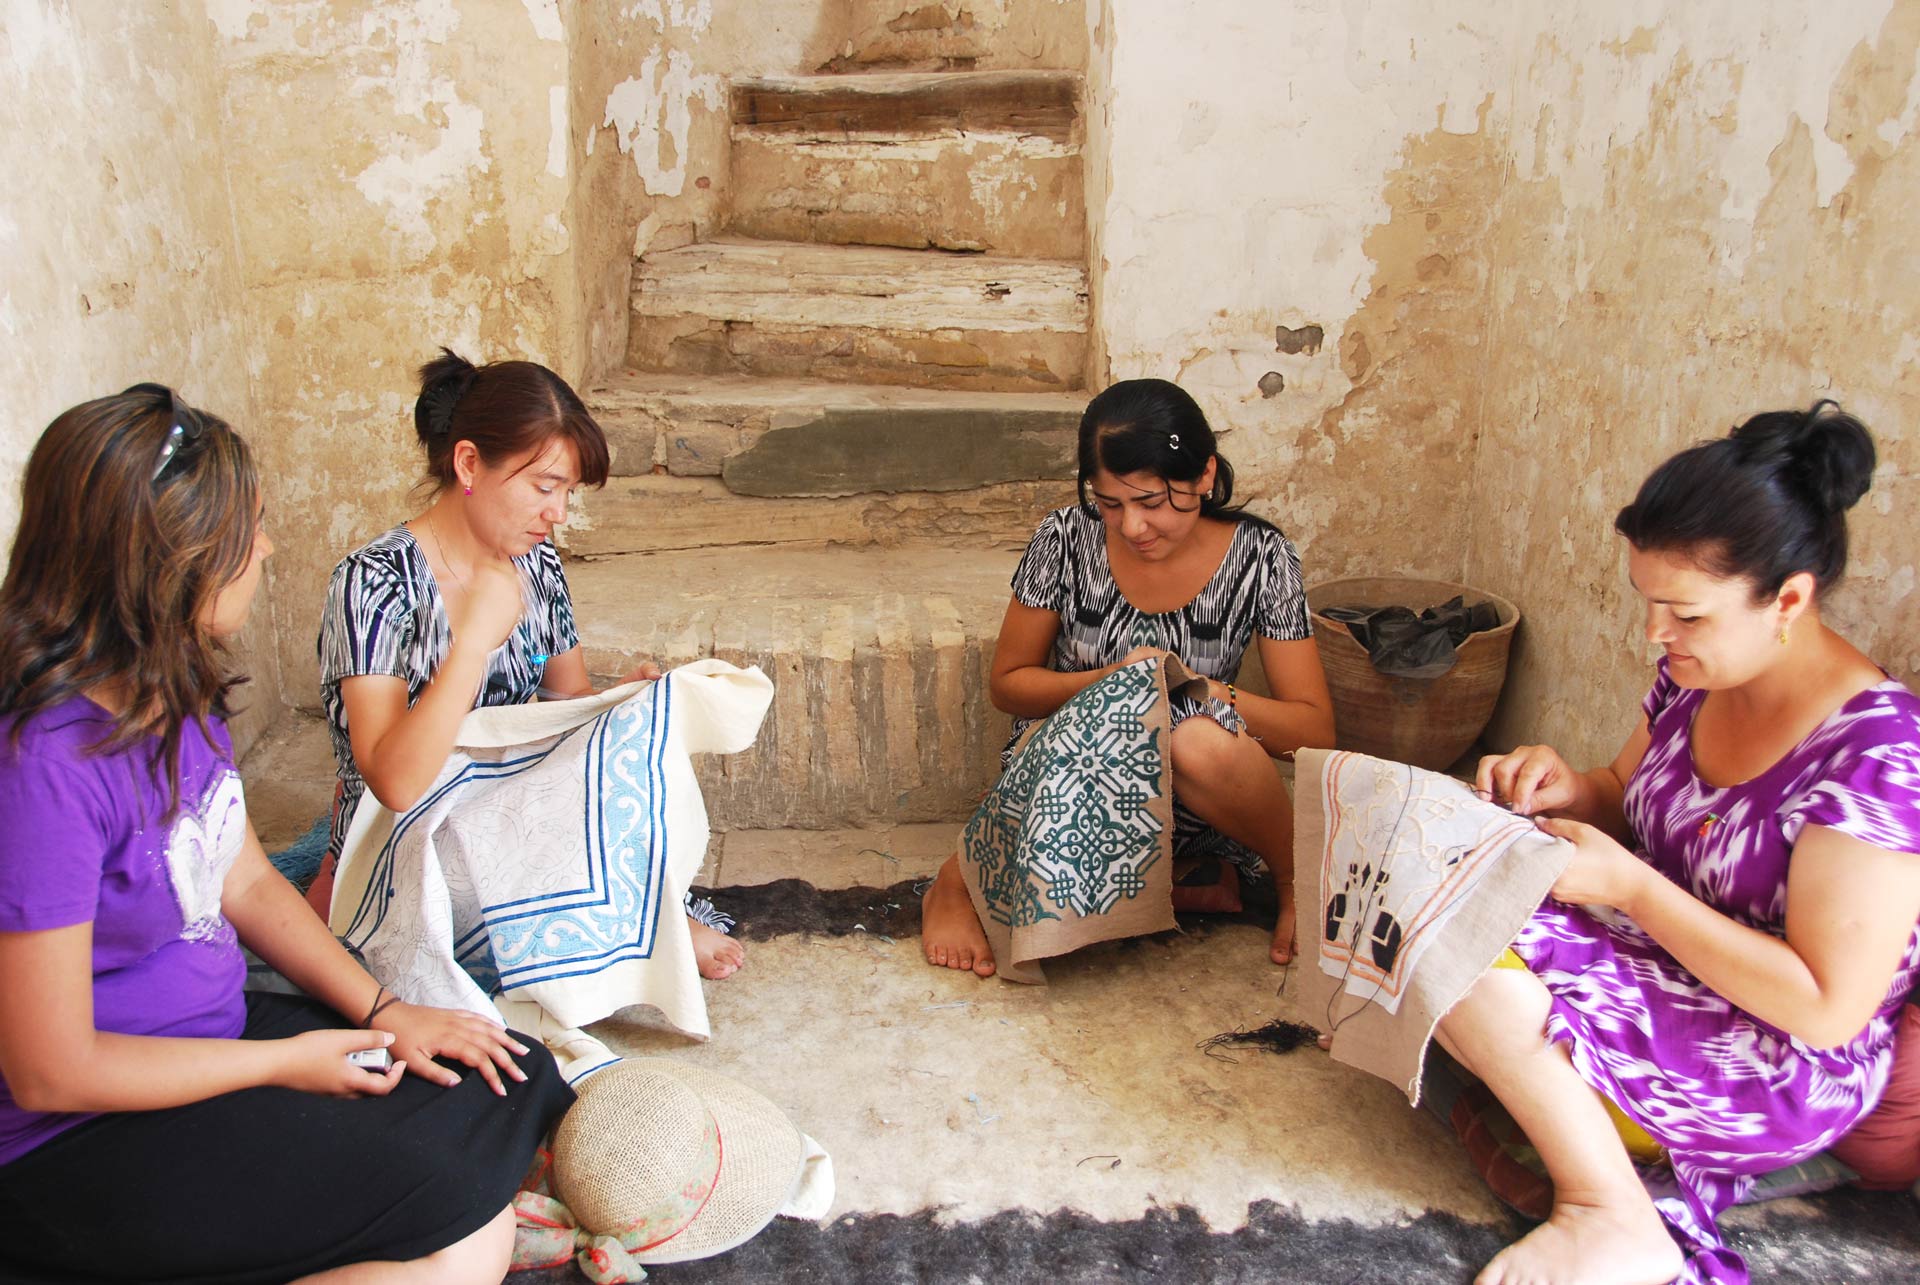 Uzbek women knotting handmade carpet in a workshop